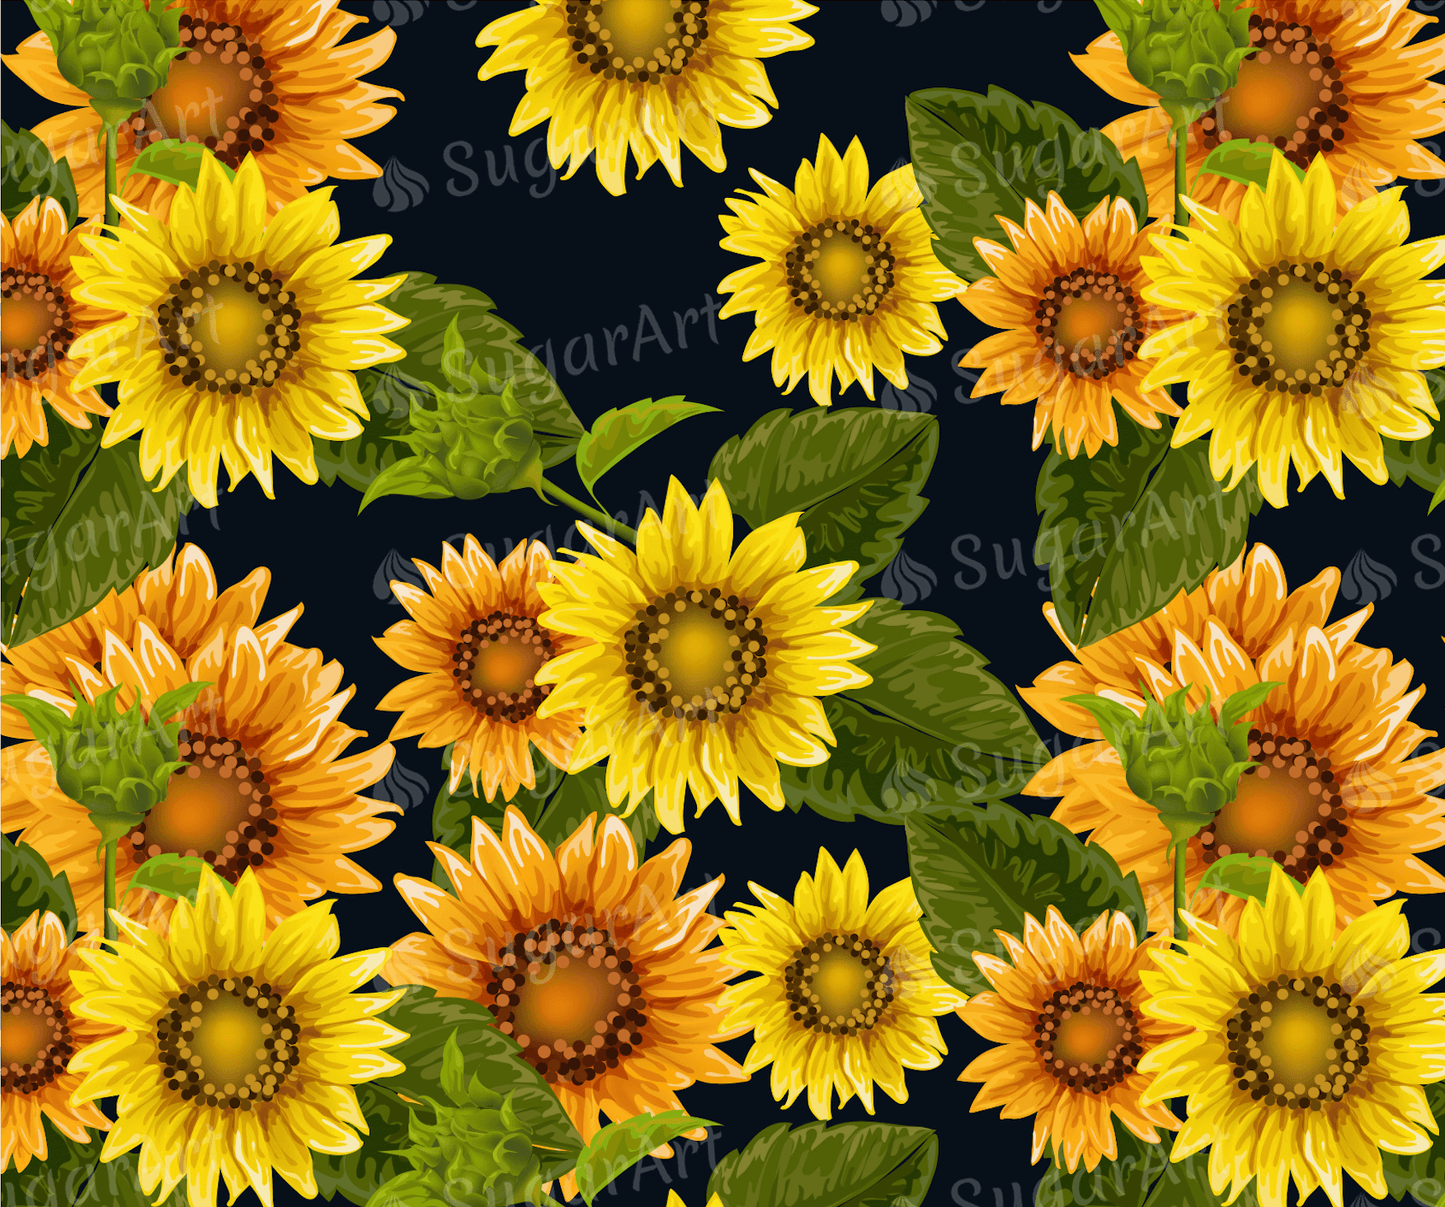 Sunflowers on Black Background - Icing - ISA006.